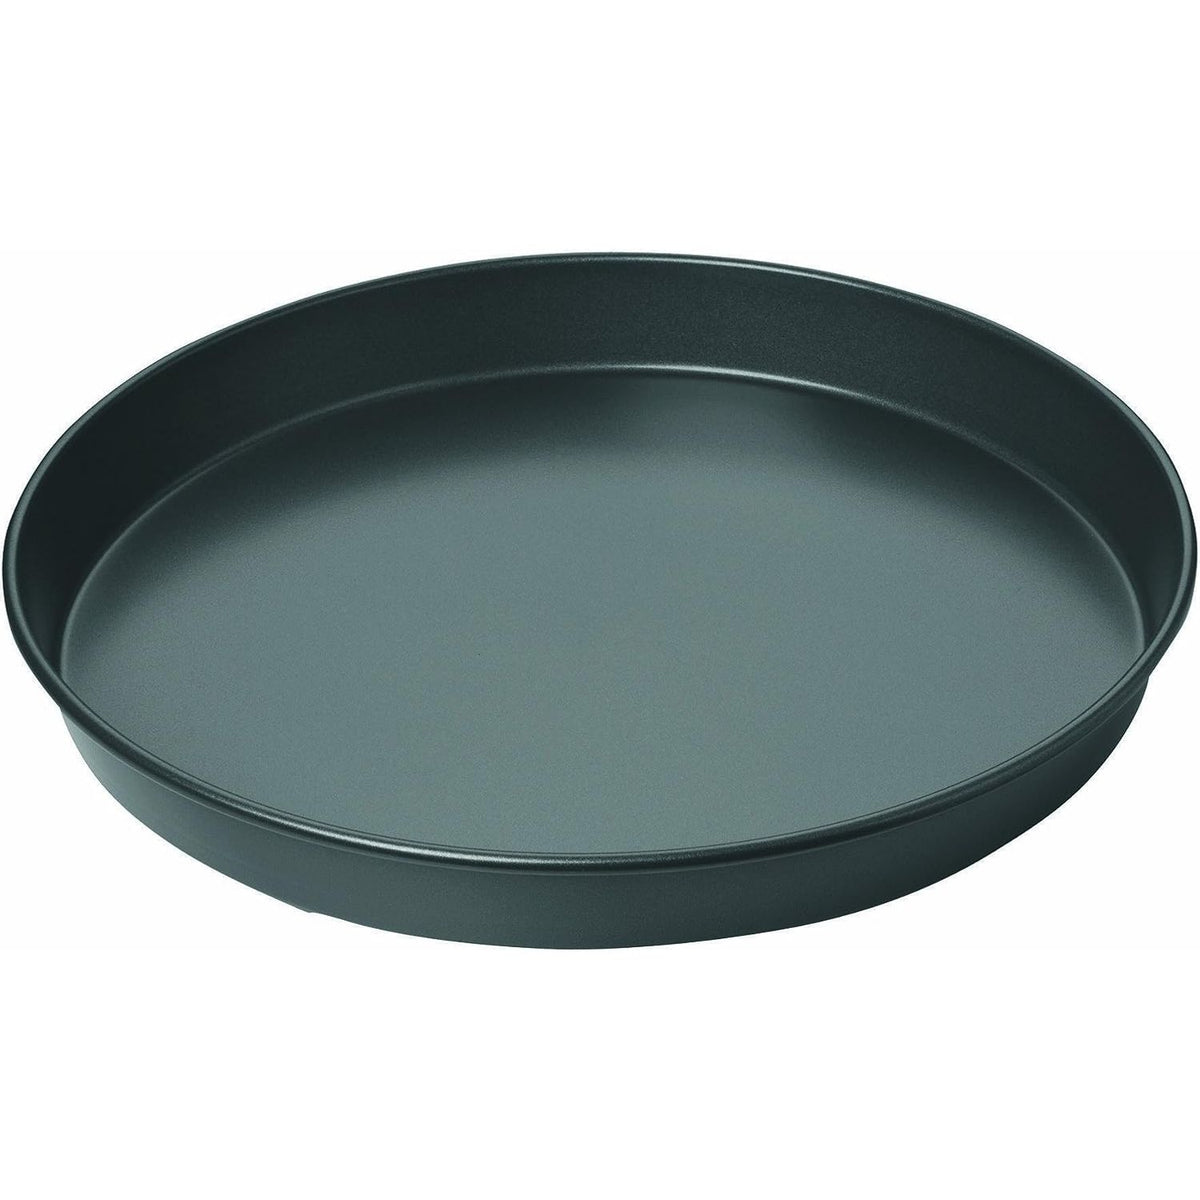 Chicago Metallic Deep Dish Pizza pan, 14-Inch diameter 